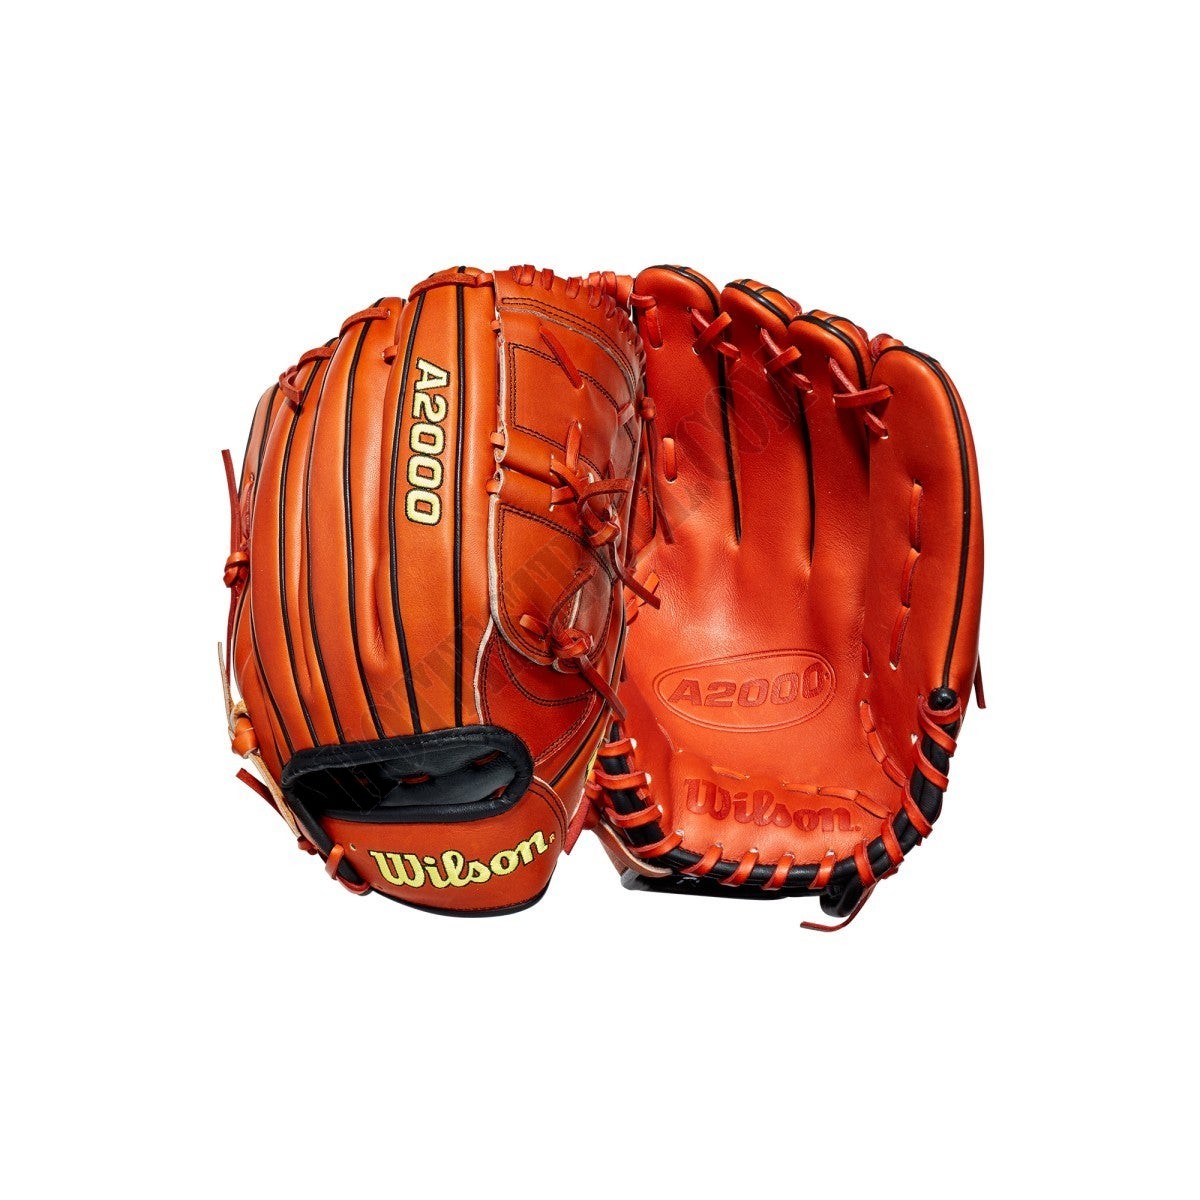 2021 A2000 B2 12" Pitcher's Baseball Glove ● Wilson Promotions - 2021 A2000 B2 12" Pitcher's Baseball Glove ● Wilson Promotions